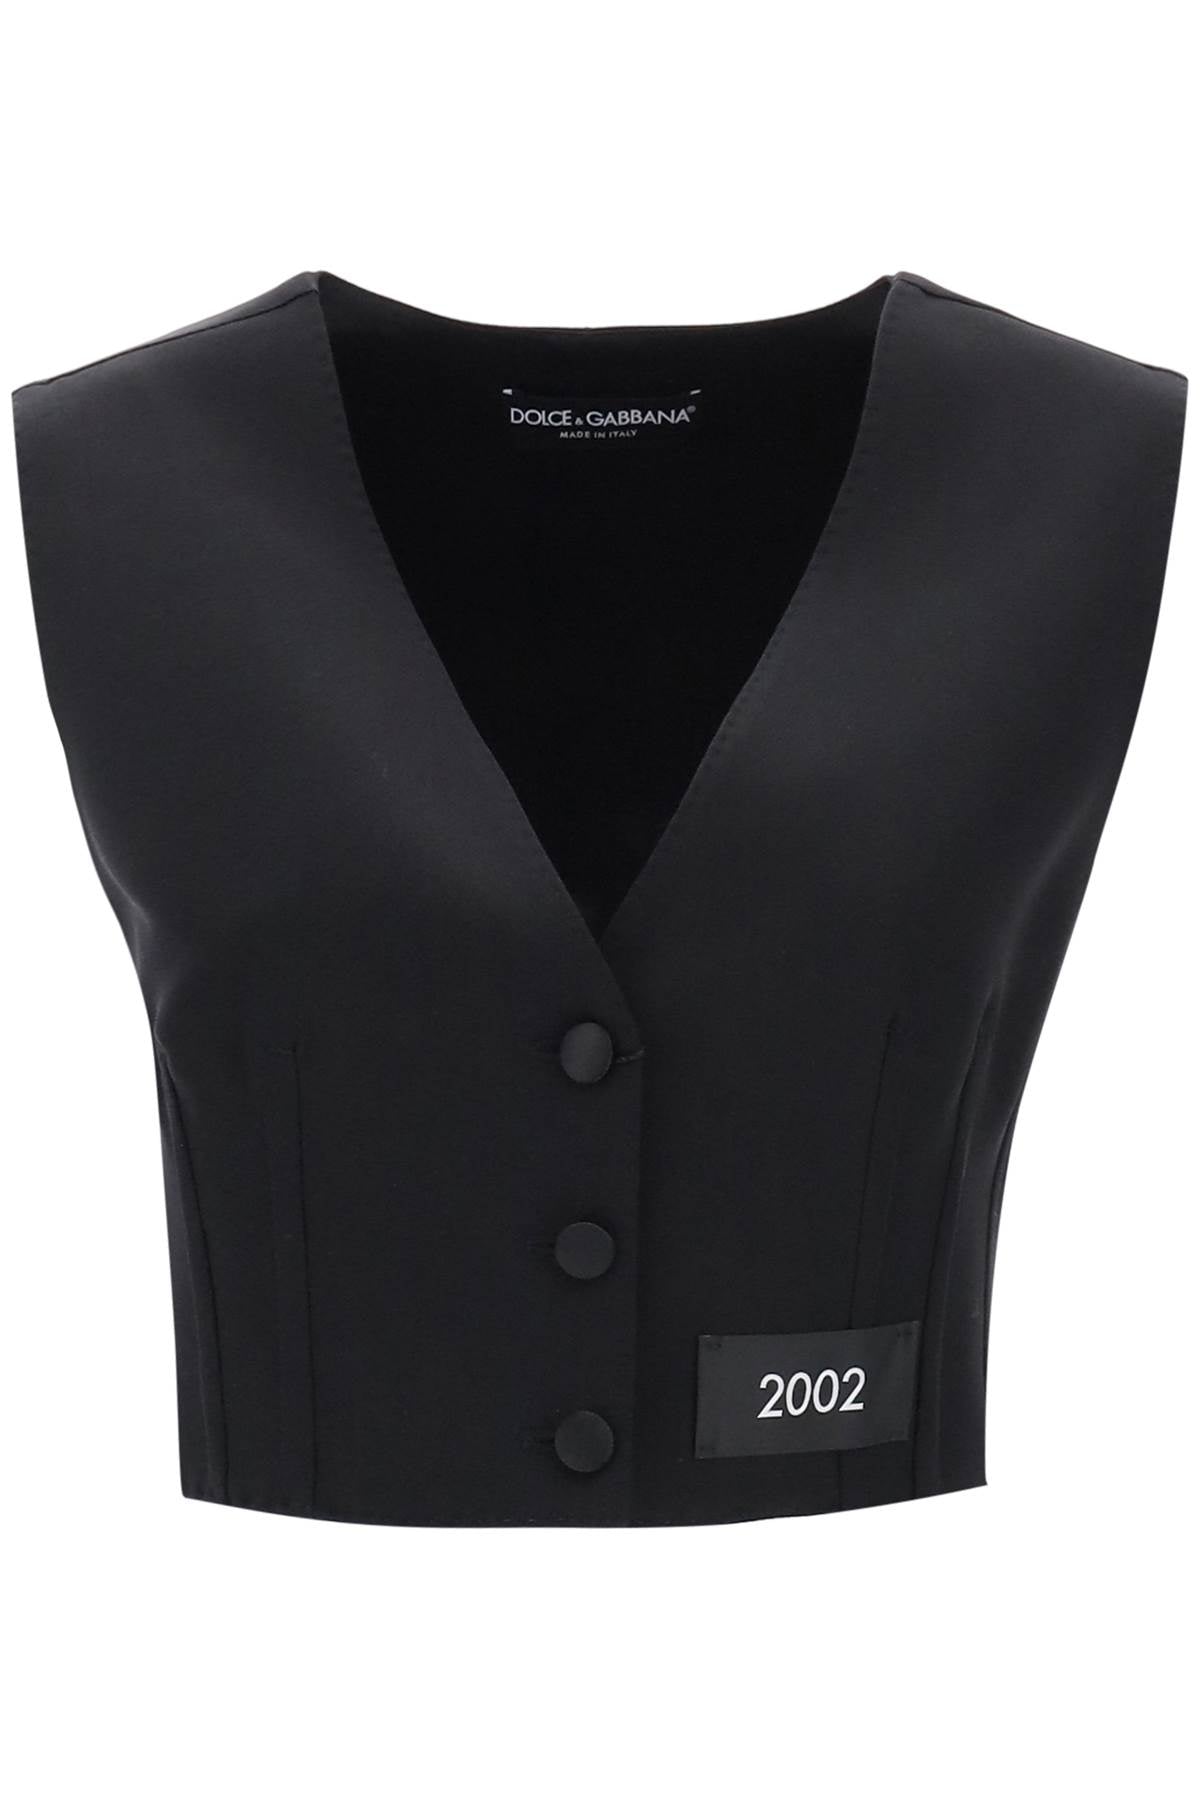 Dolce & gabbana re-edition tailoring waistcoat-0